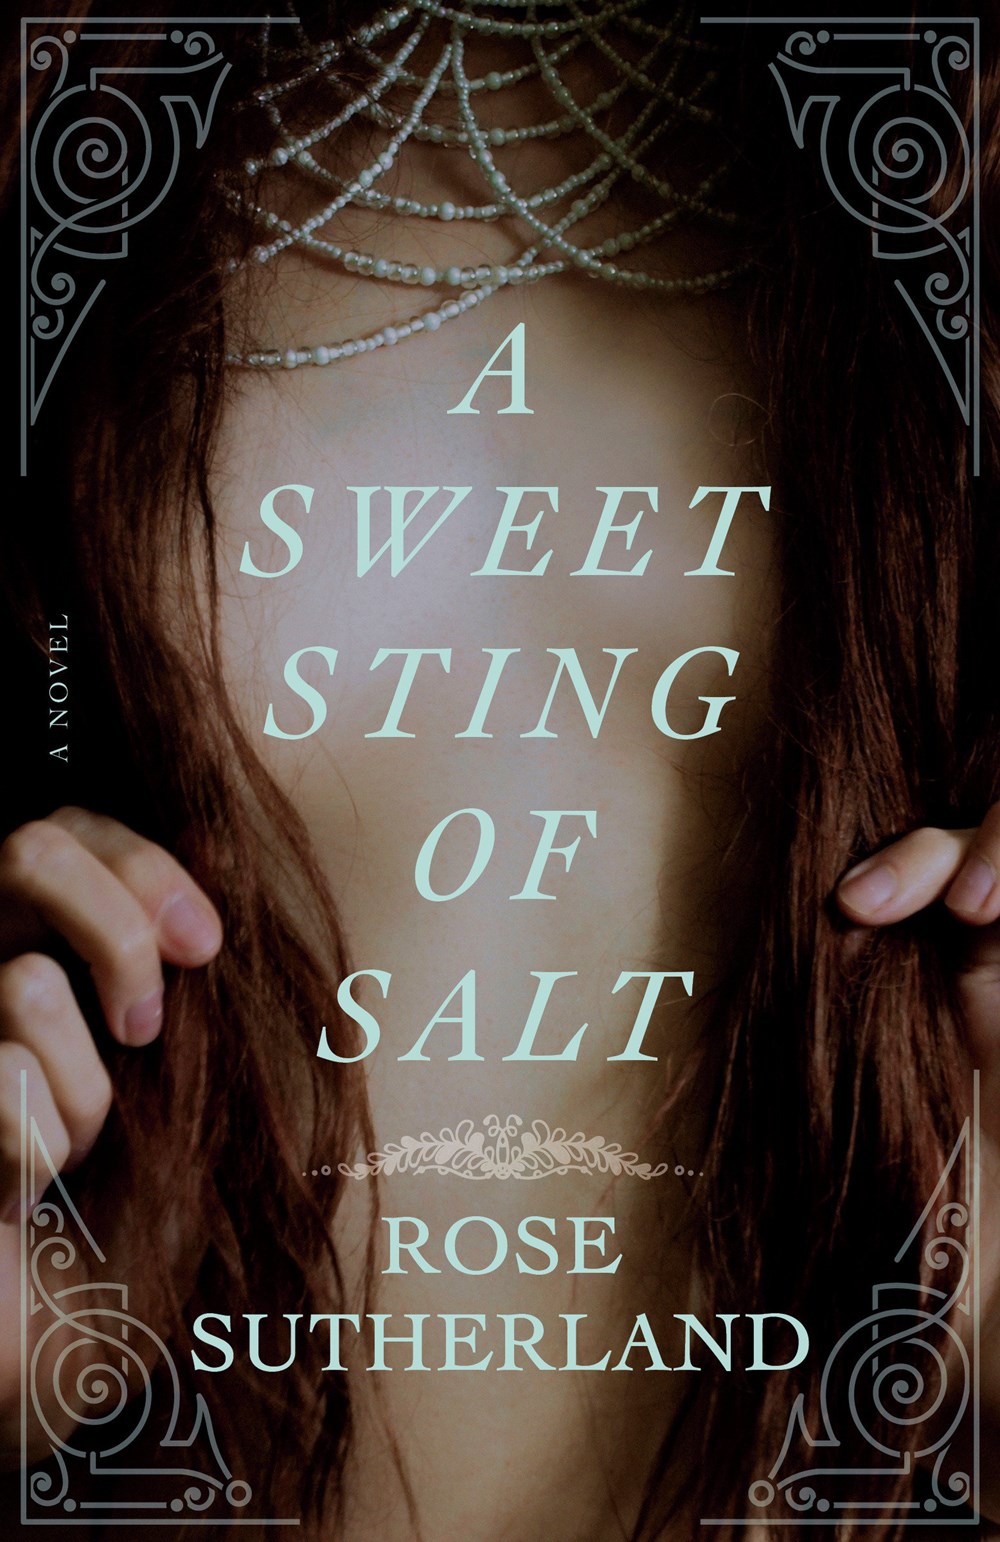 Rose Sutherland - A Sweet Sting of Salt